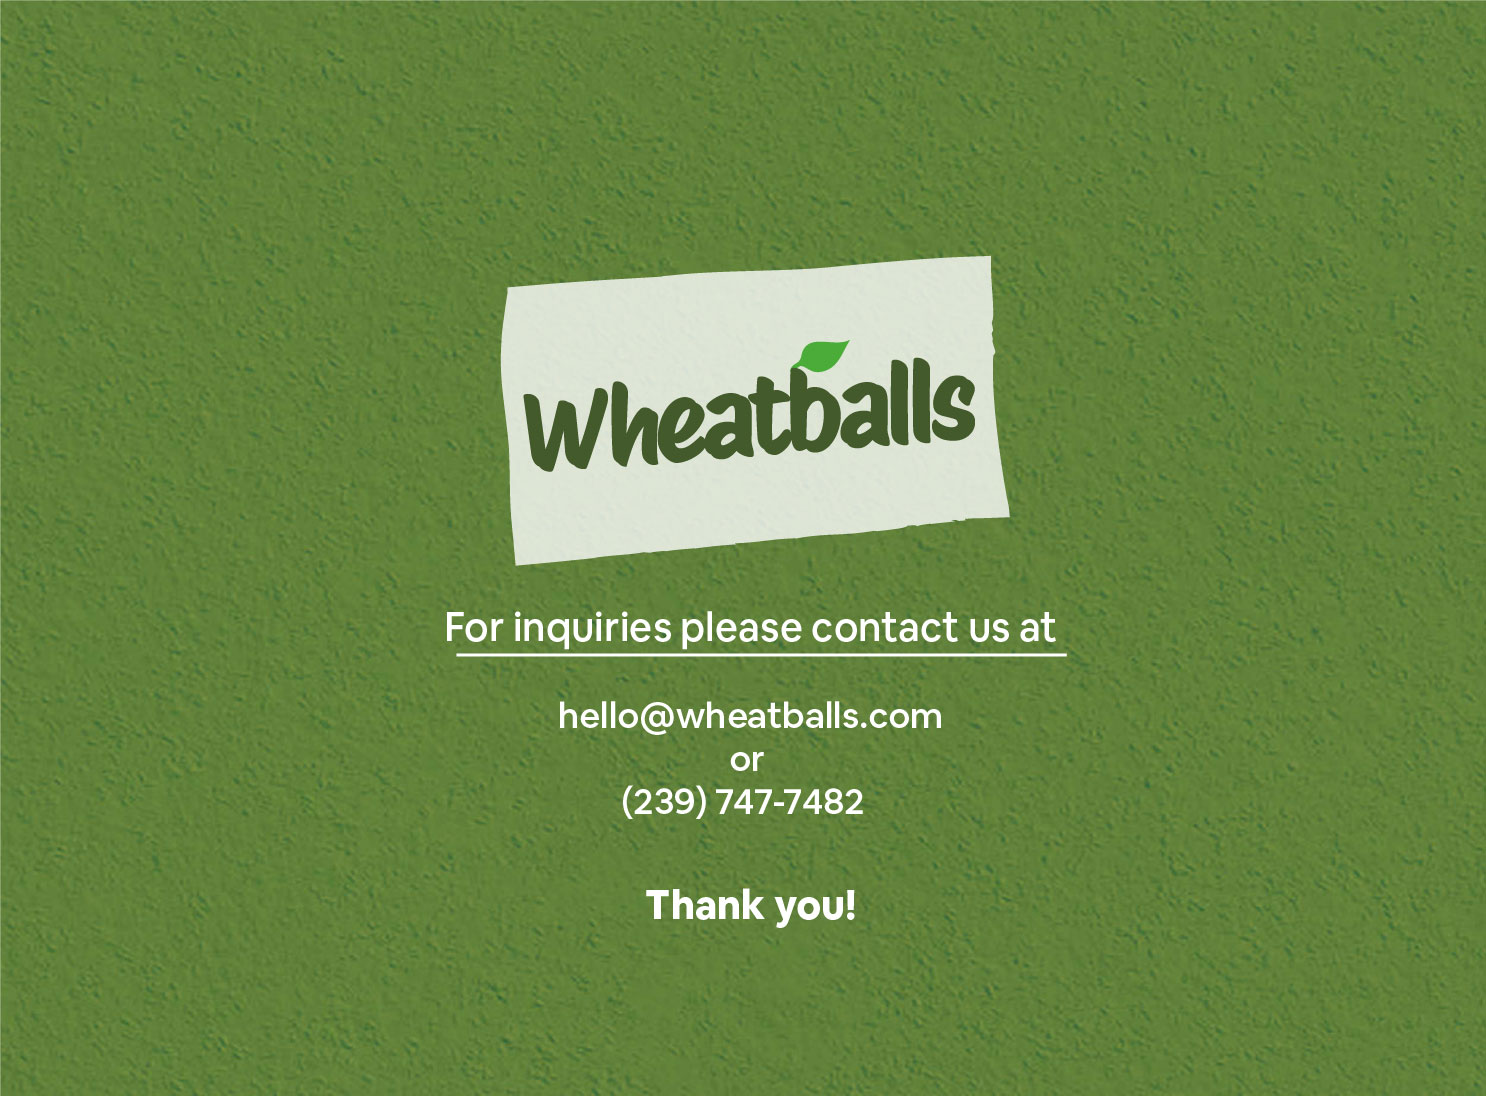 Wheatballs.com